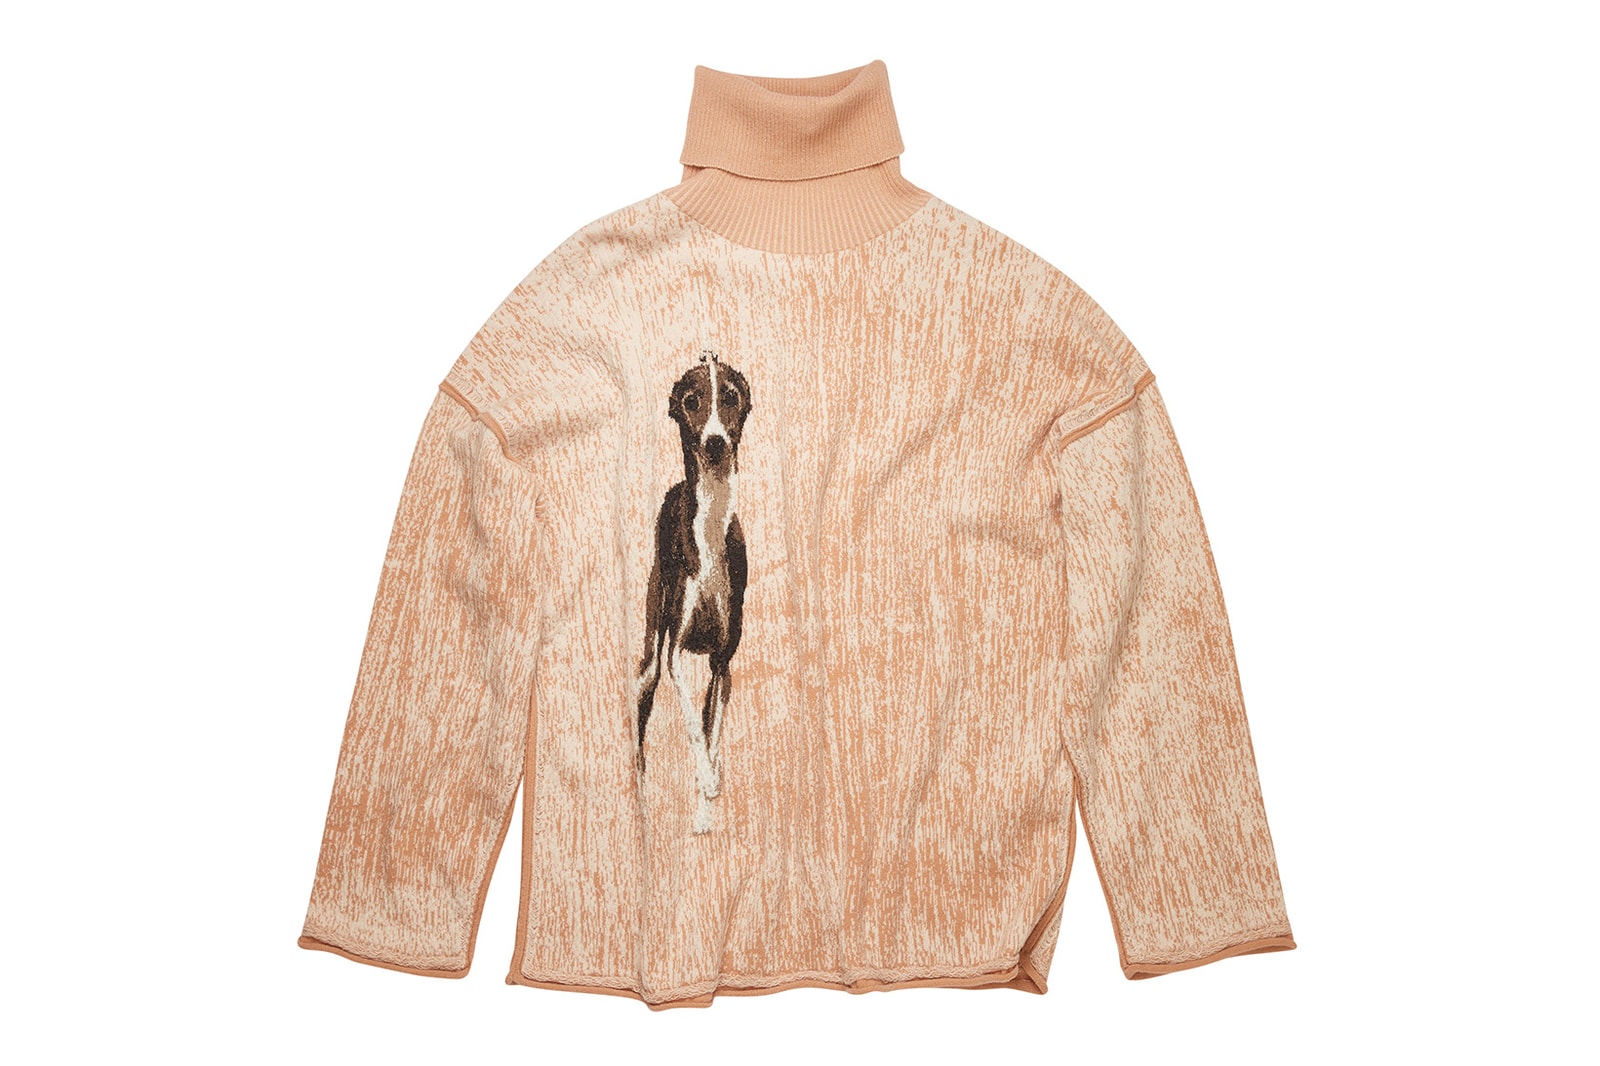 acne studios fall winter campaign dogs pets employees shirts flannels hoodies blazers coats jonny johansson 